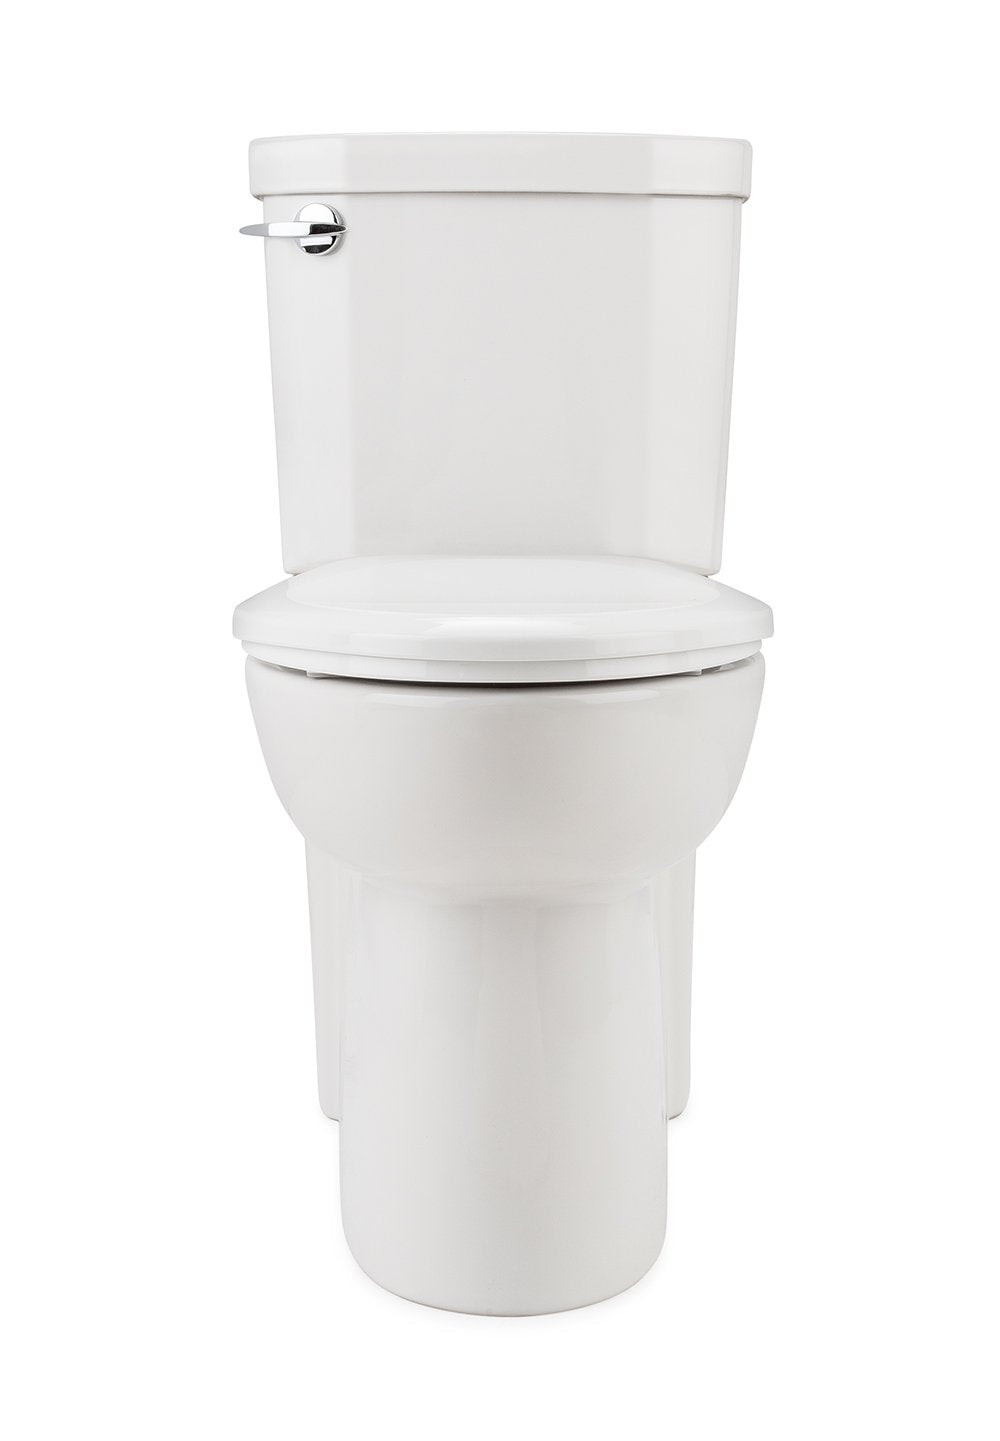 Premium Toilet seat - Mounted - Front View